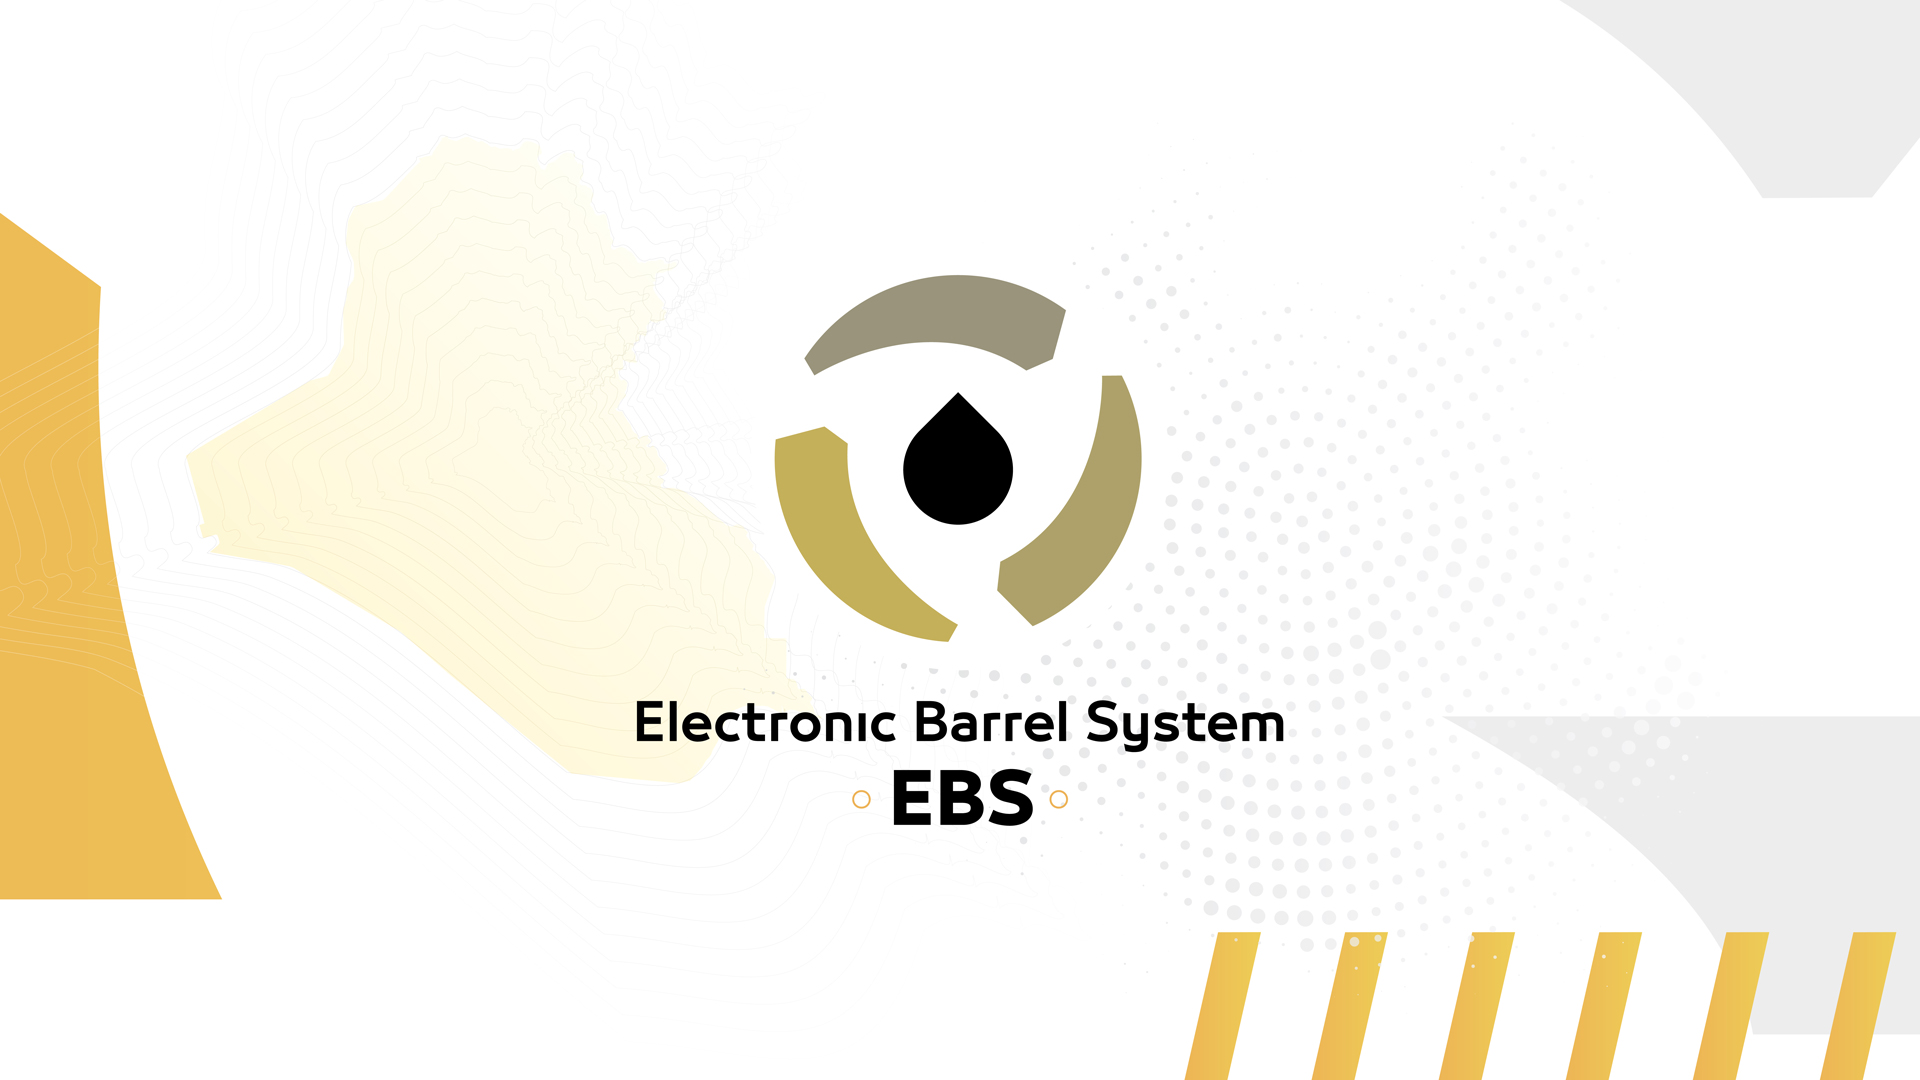 Electronic Barrel System 2